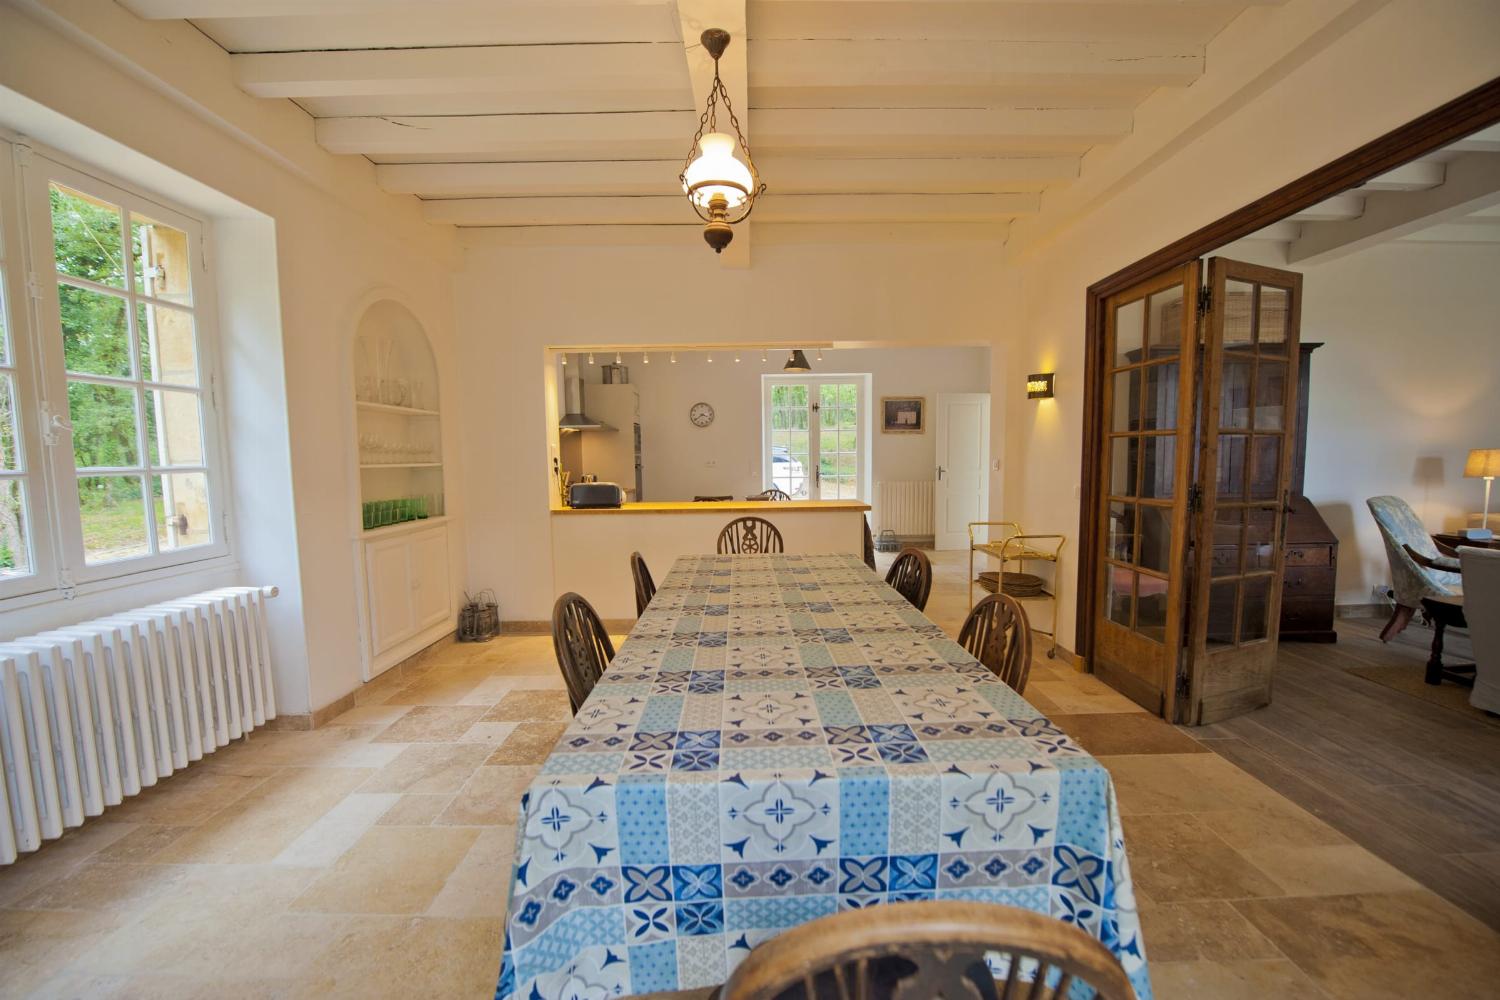 Dining room | Rental accommodation in Dordogne